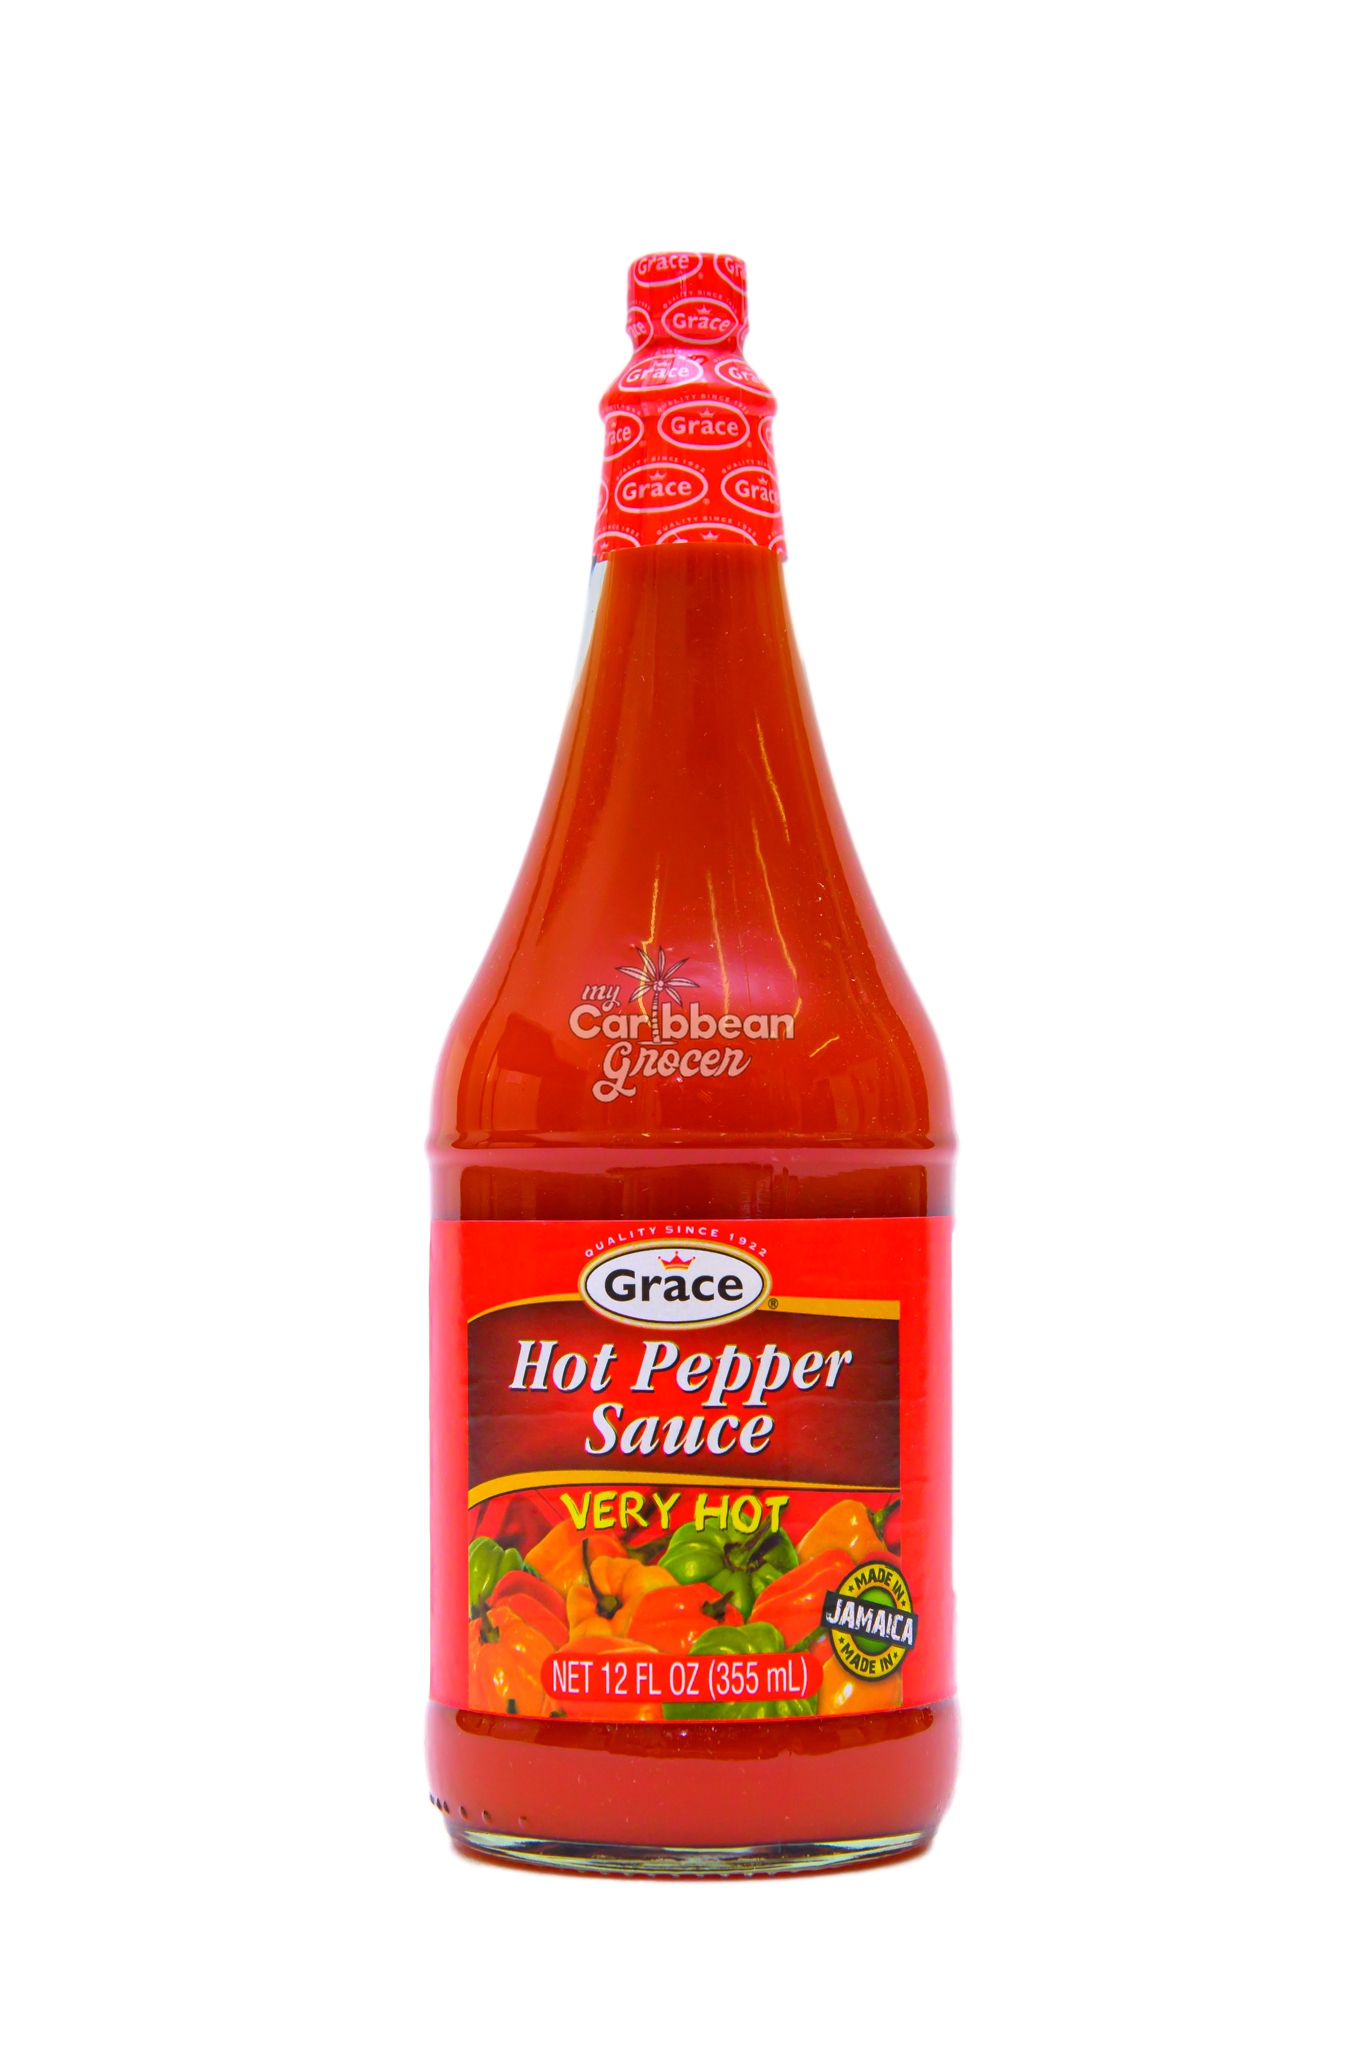 Grace Hot Pepper Sauces 188 My Caribbean Grocer